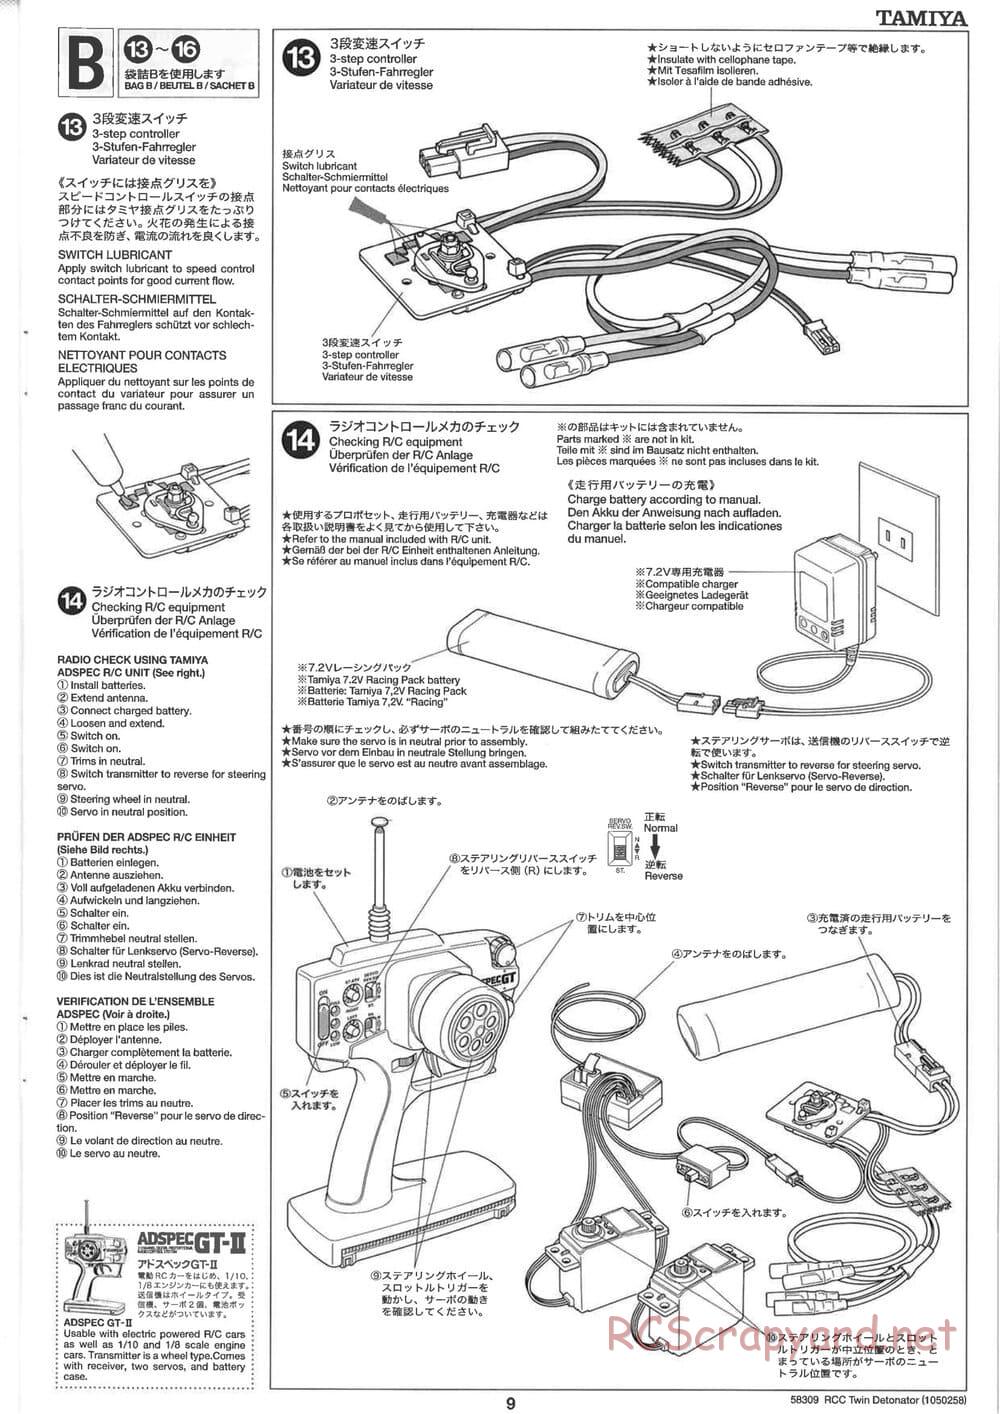 Tamiya - Twin Detonator - WR-01 Chassis - Manual - Page 9